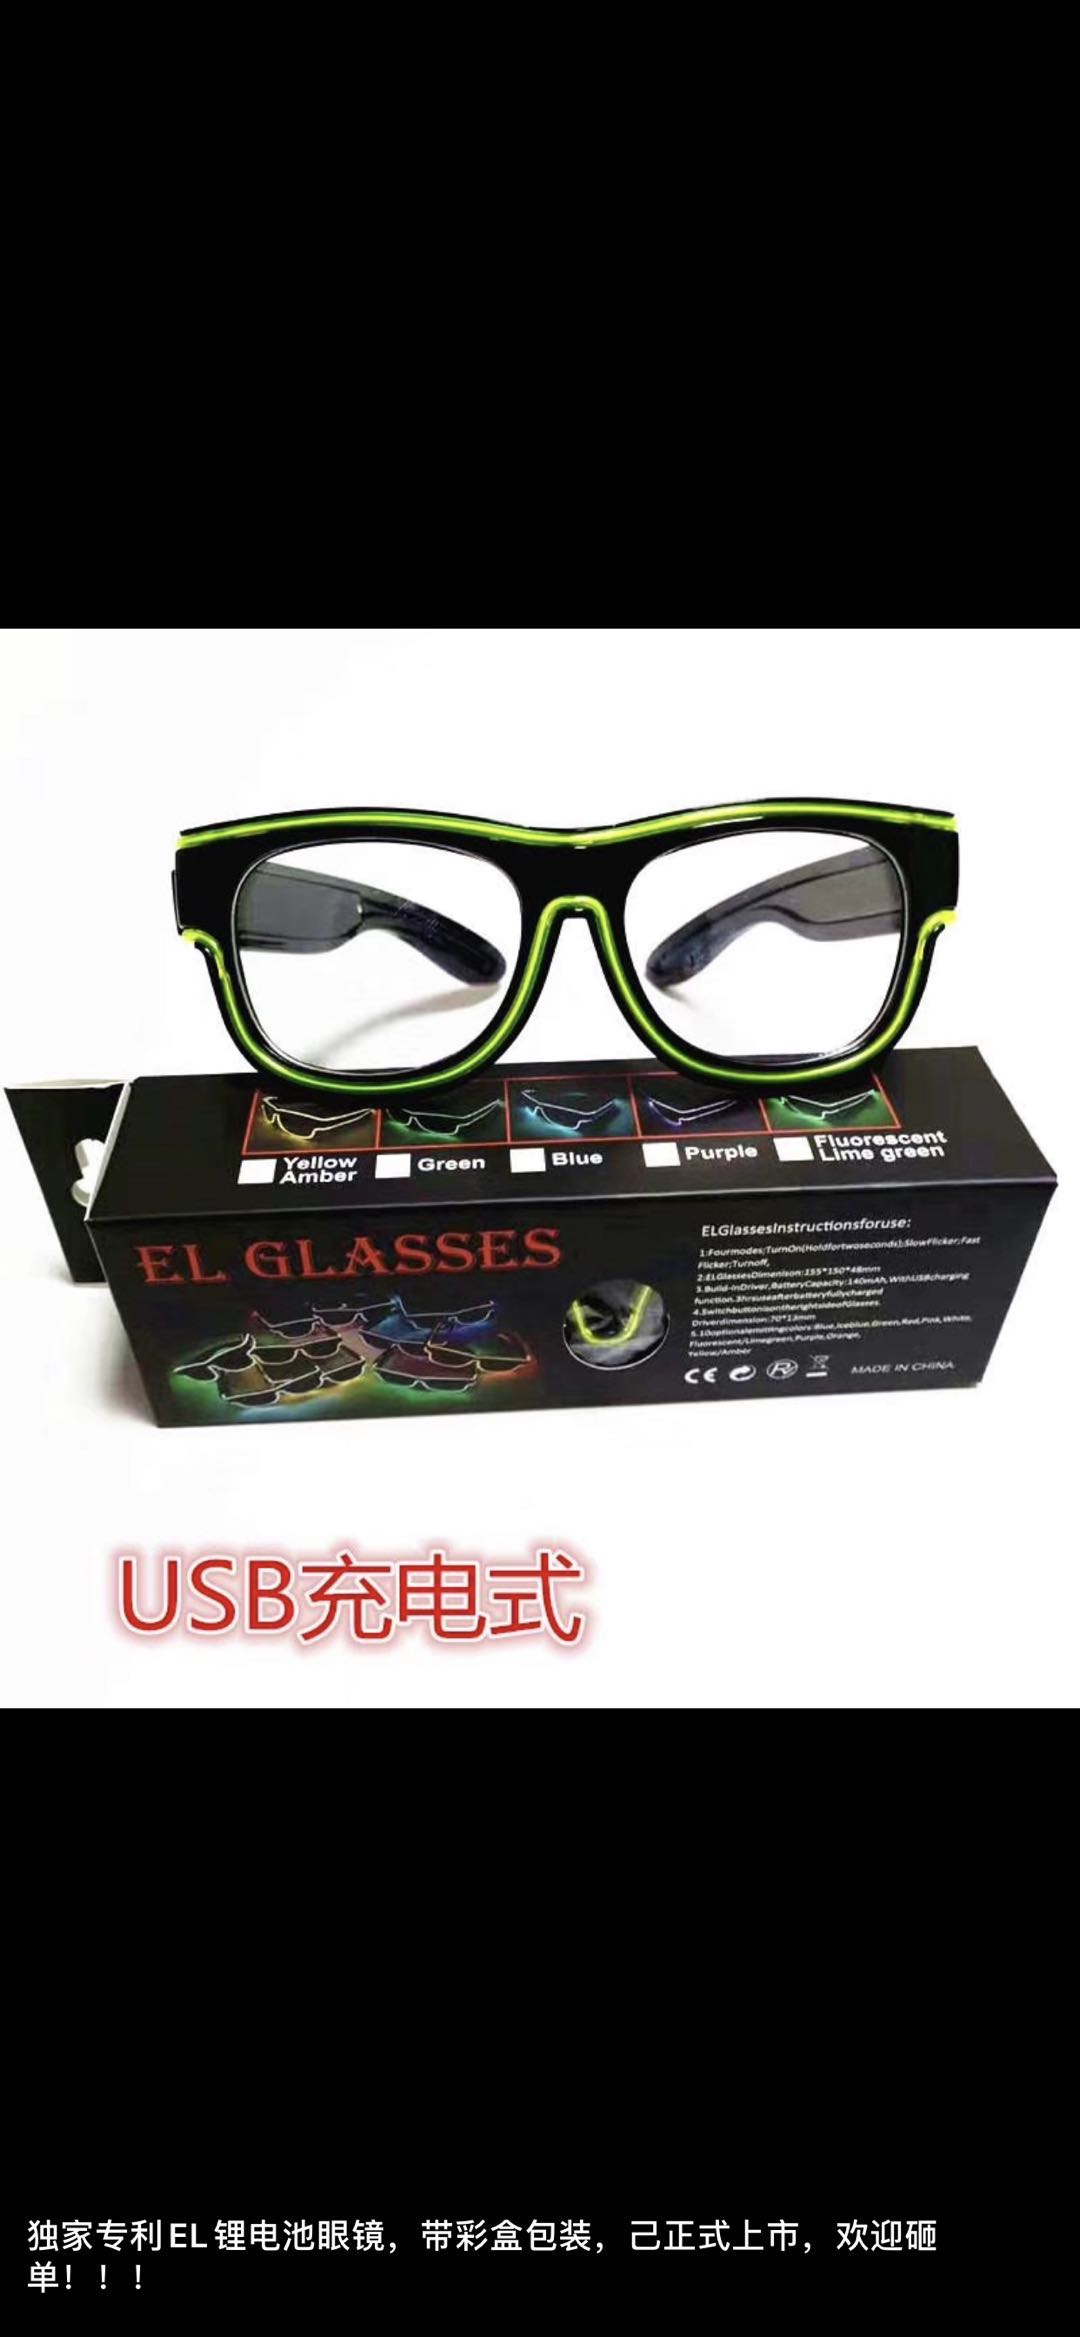 USB发光眼镜产品图